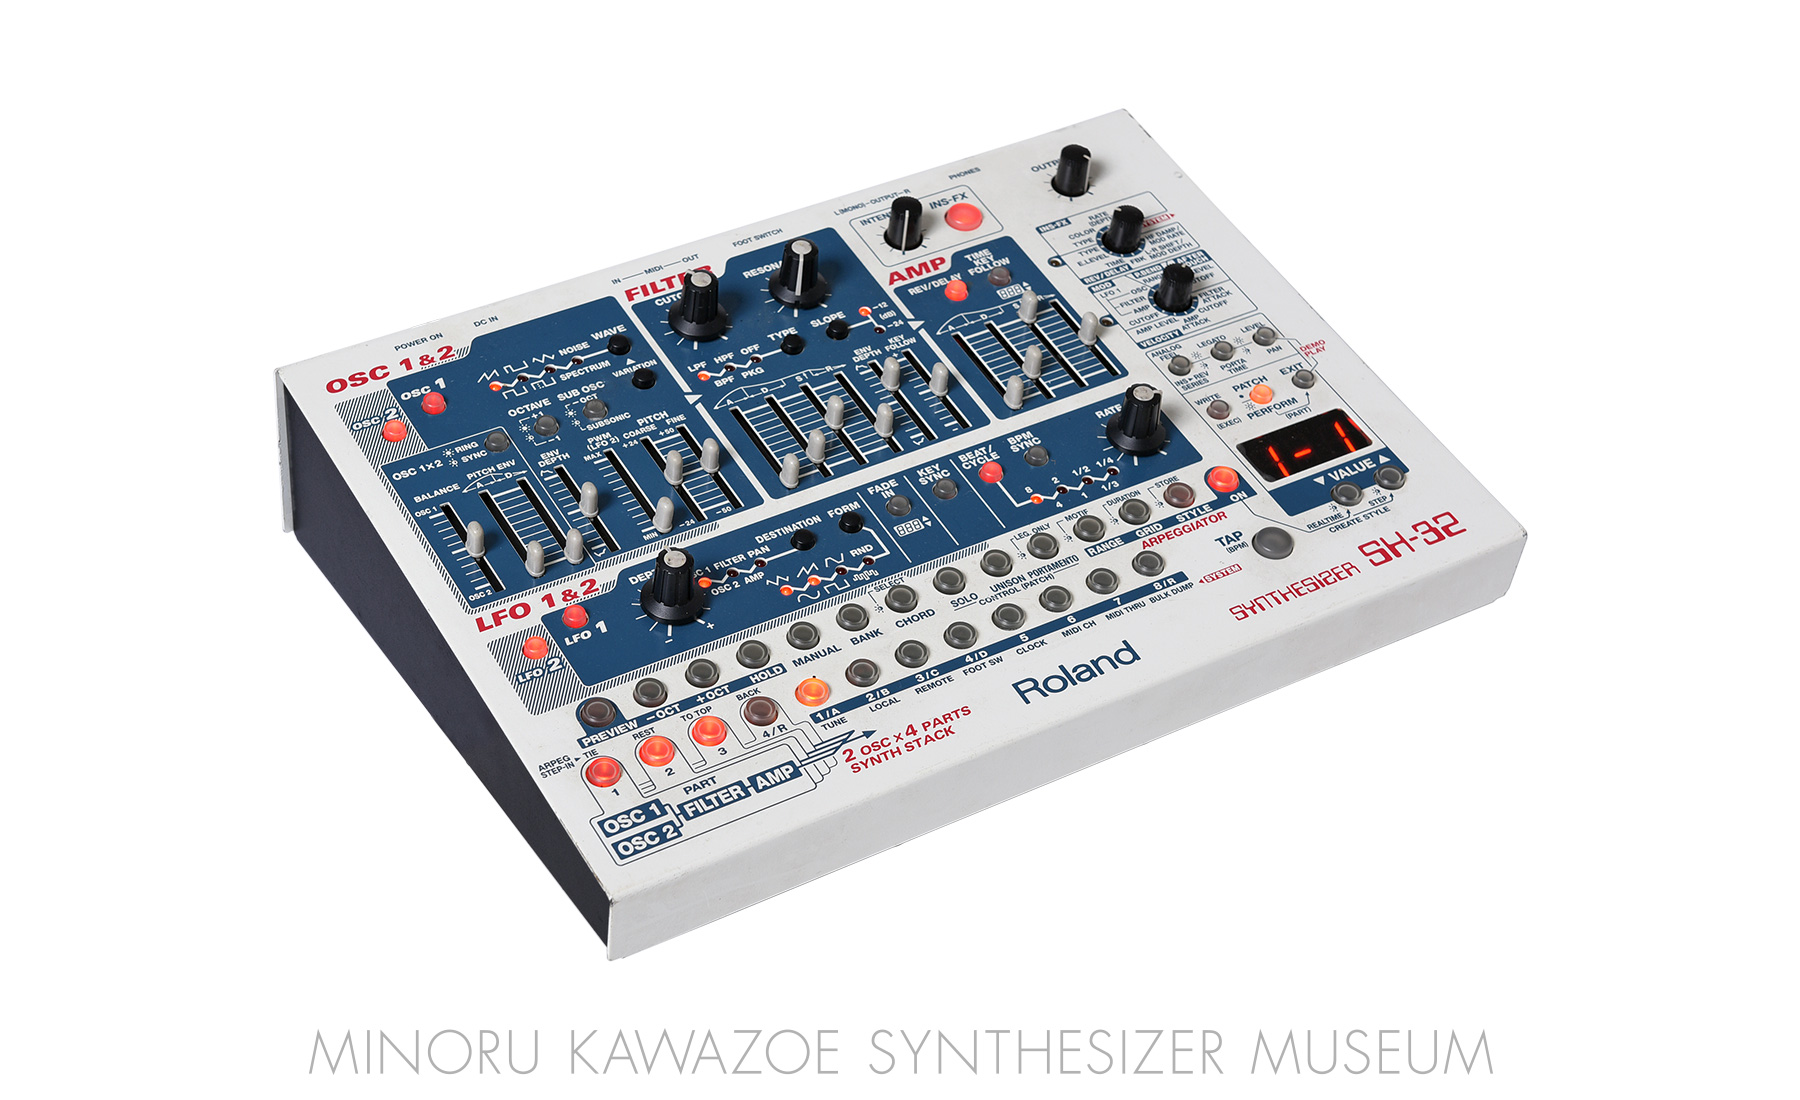 Minoru Kawazoe Synthesizer Museum - List